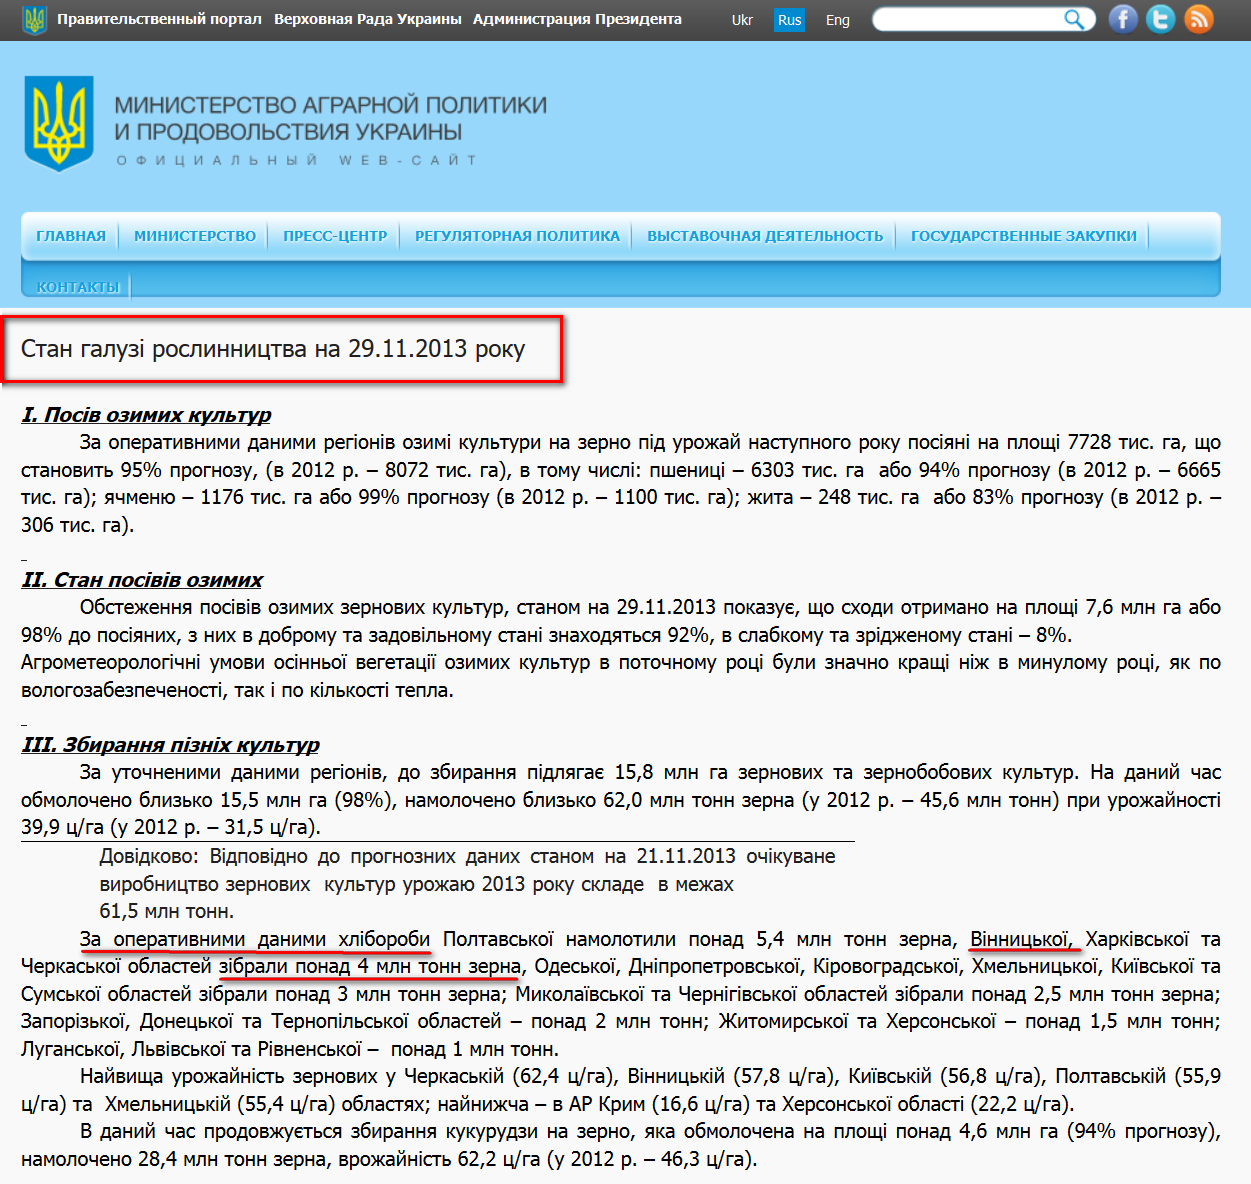 http://minagro.gov.ua/ru/node/3953